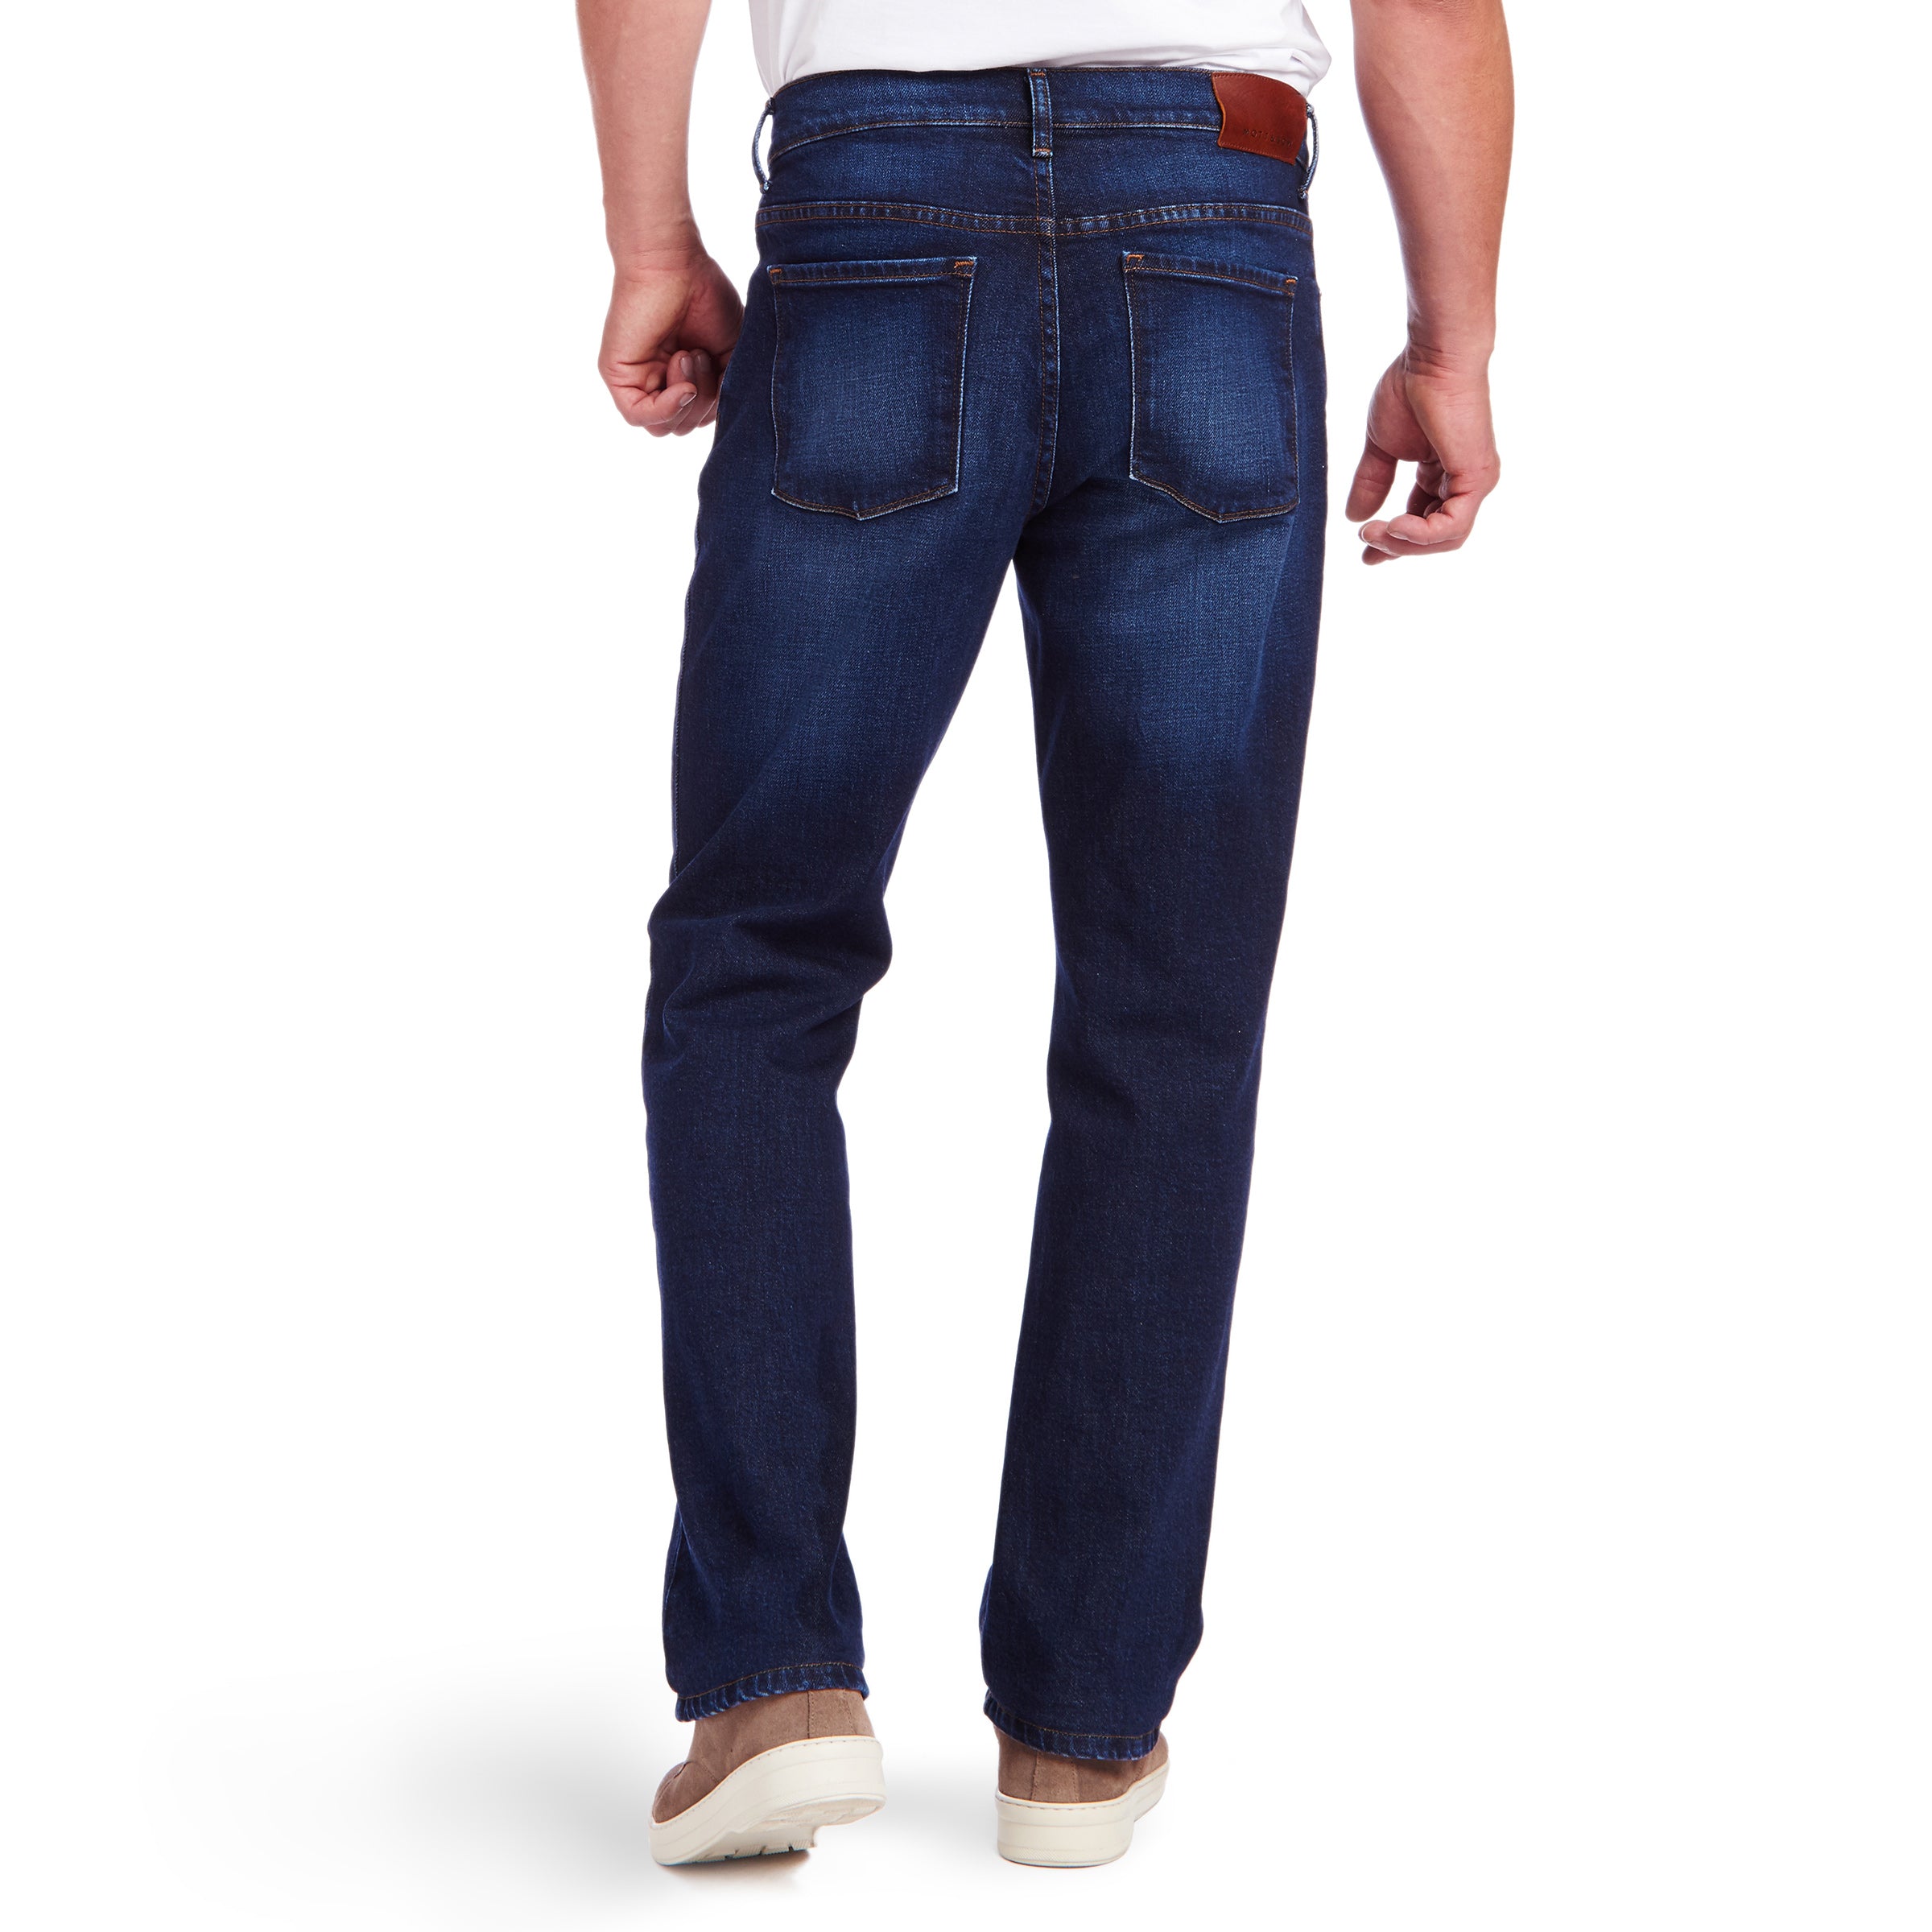 Men wearing Medium/Dark Blue Straight Hubert Jeans